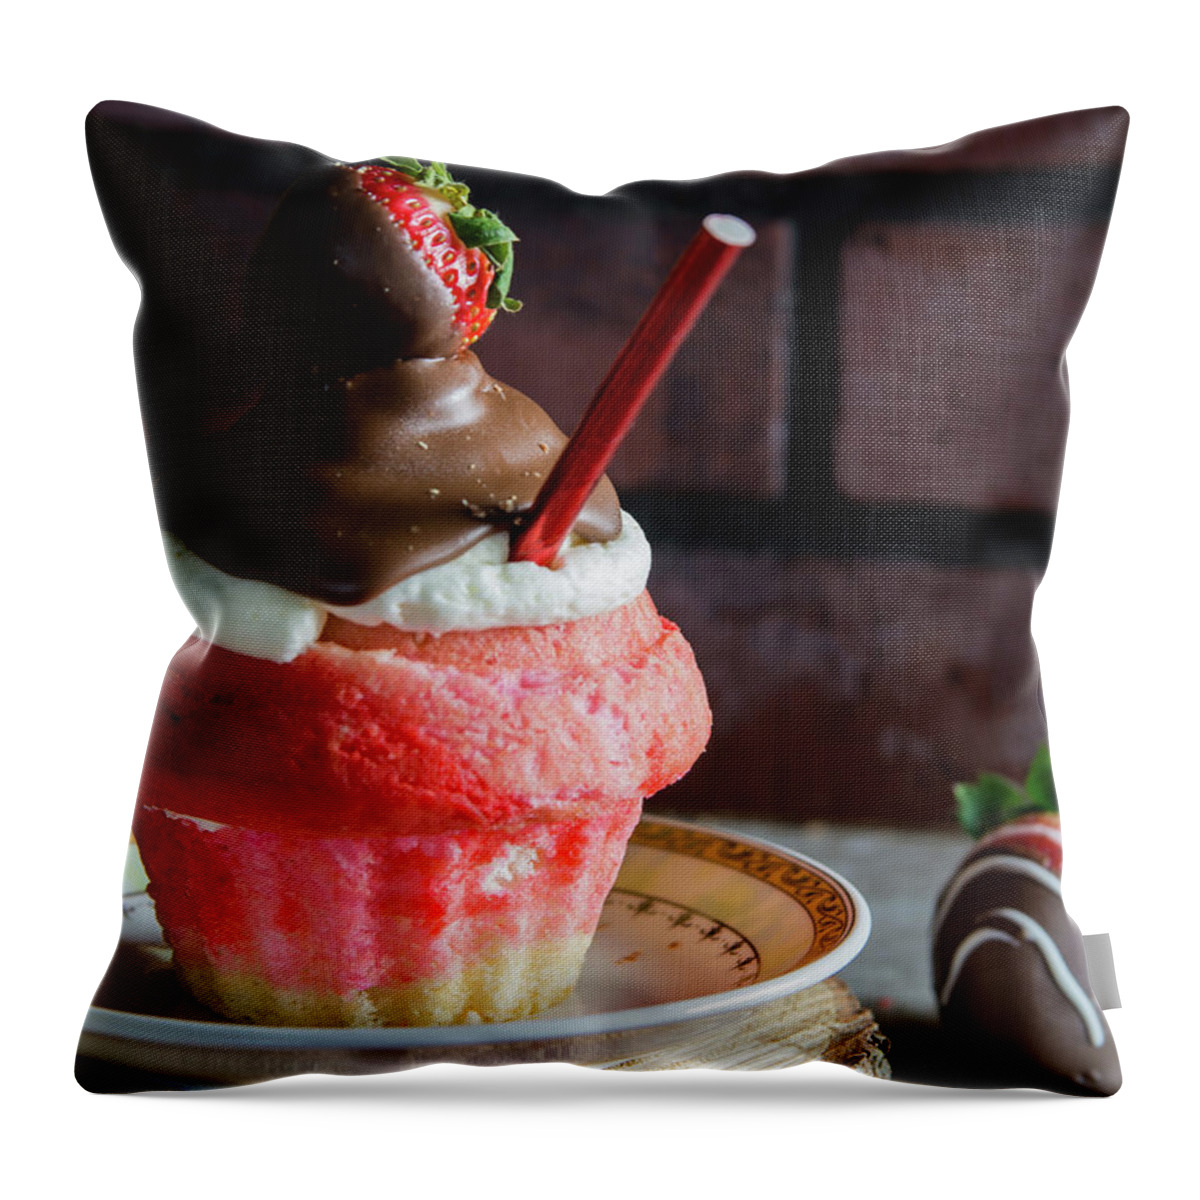 Cake Throw Pillow featuring the photograph Strawberry Sundae by Deborah Klubertanz